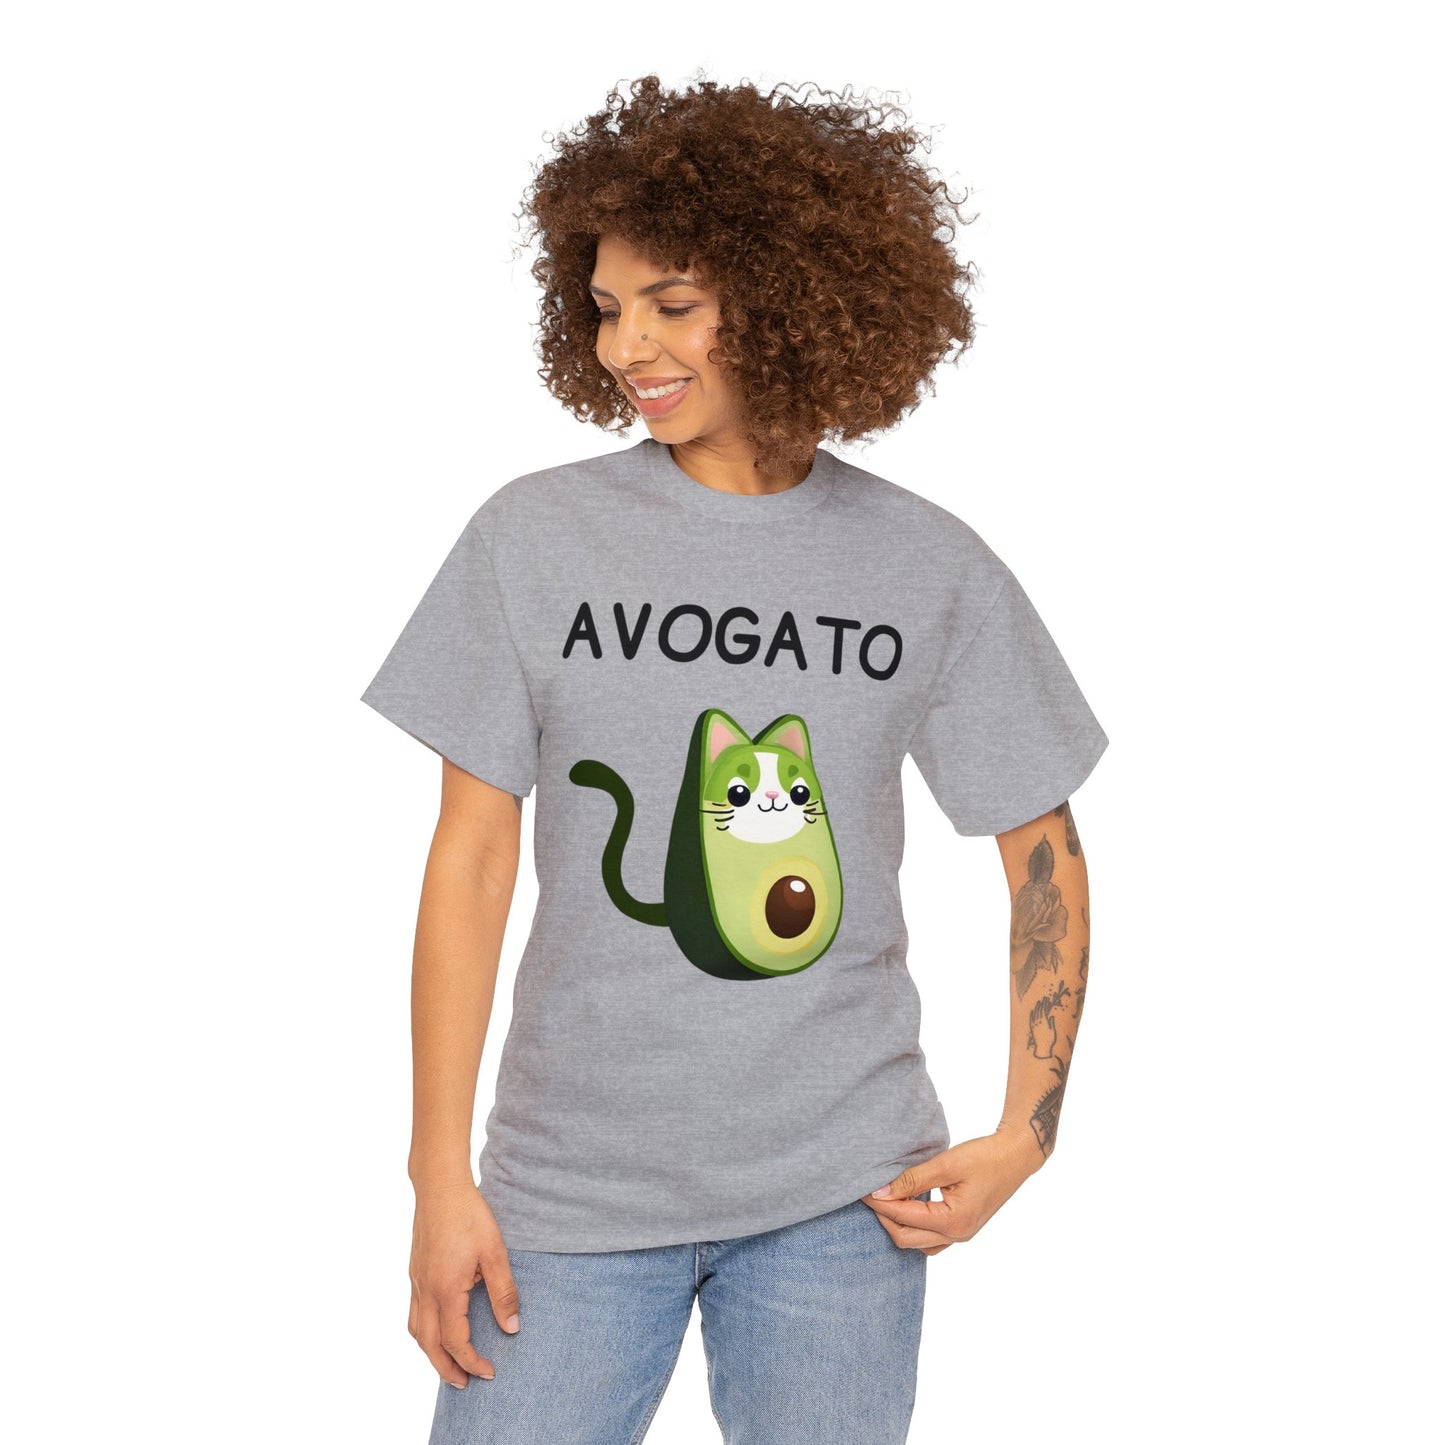 Avogato Funny T shirt Cute Avocado Cat Face Tee Novelty Humor Men Women Graphic Tee Kawaii Friends